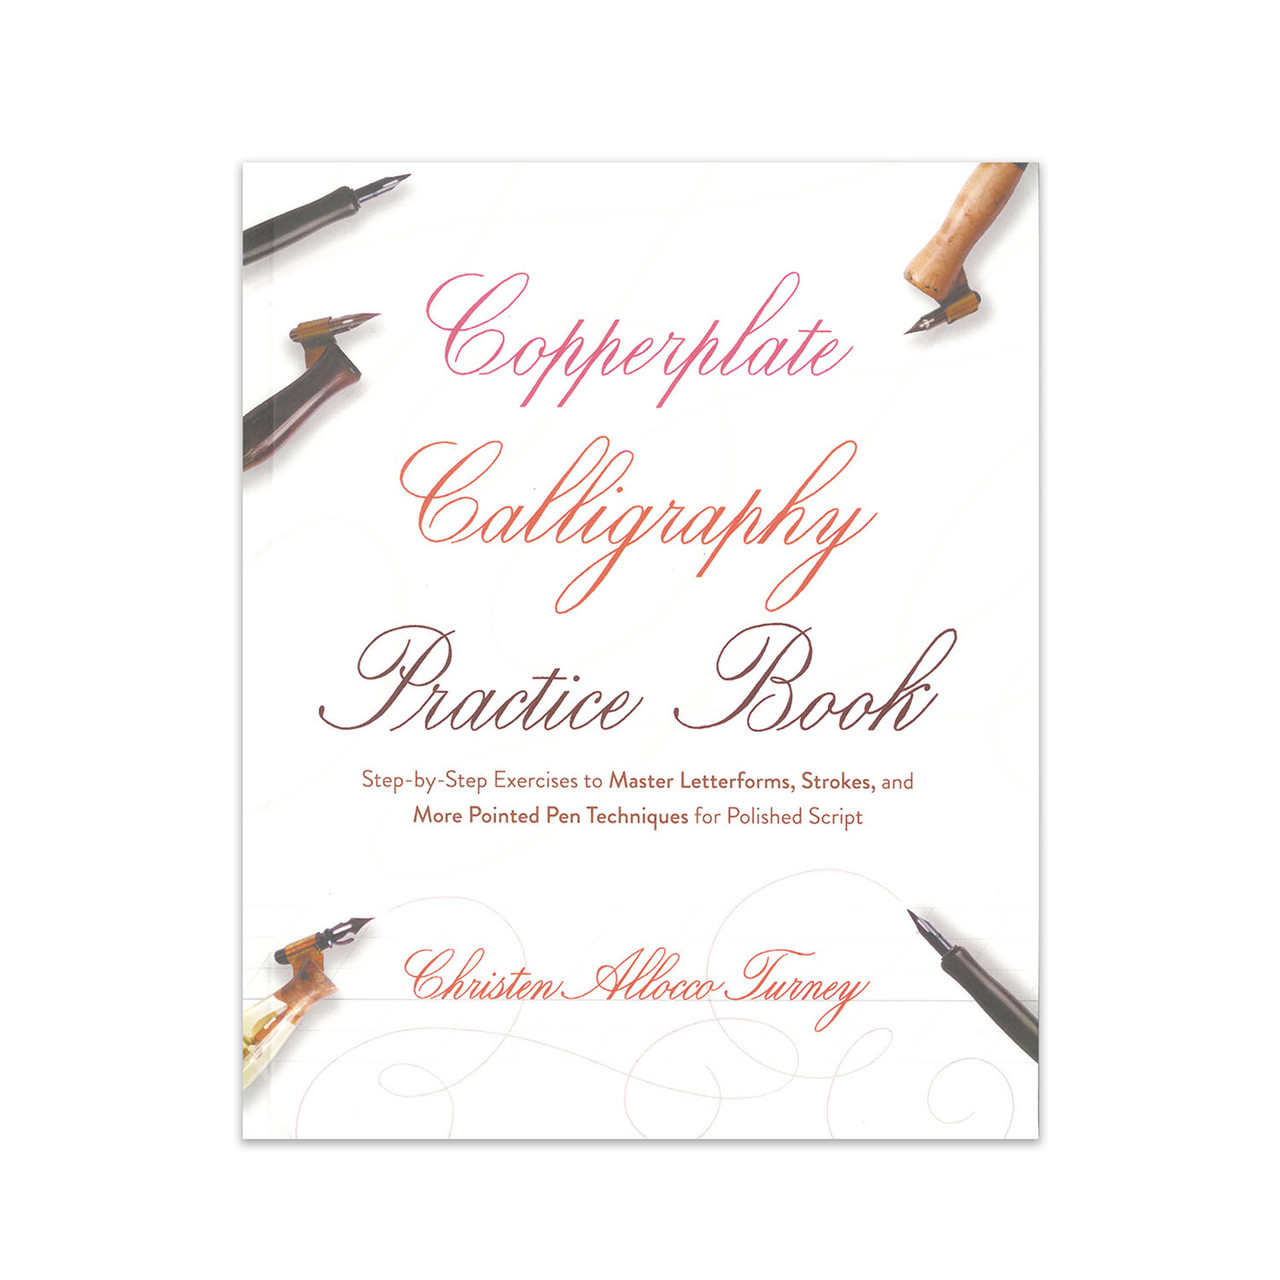 Uppercase Alphabet - Modern Calligraphy Worksheet - Modern Calligraphy Kits  and Classes, Calligraphy Inks